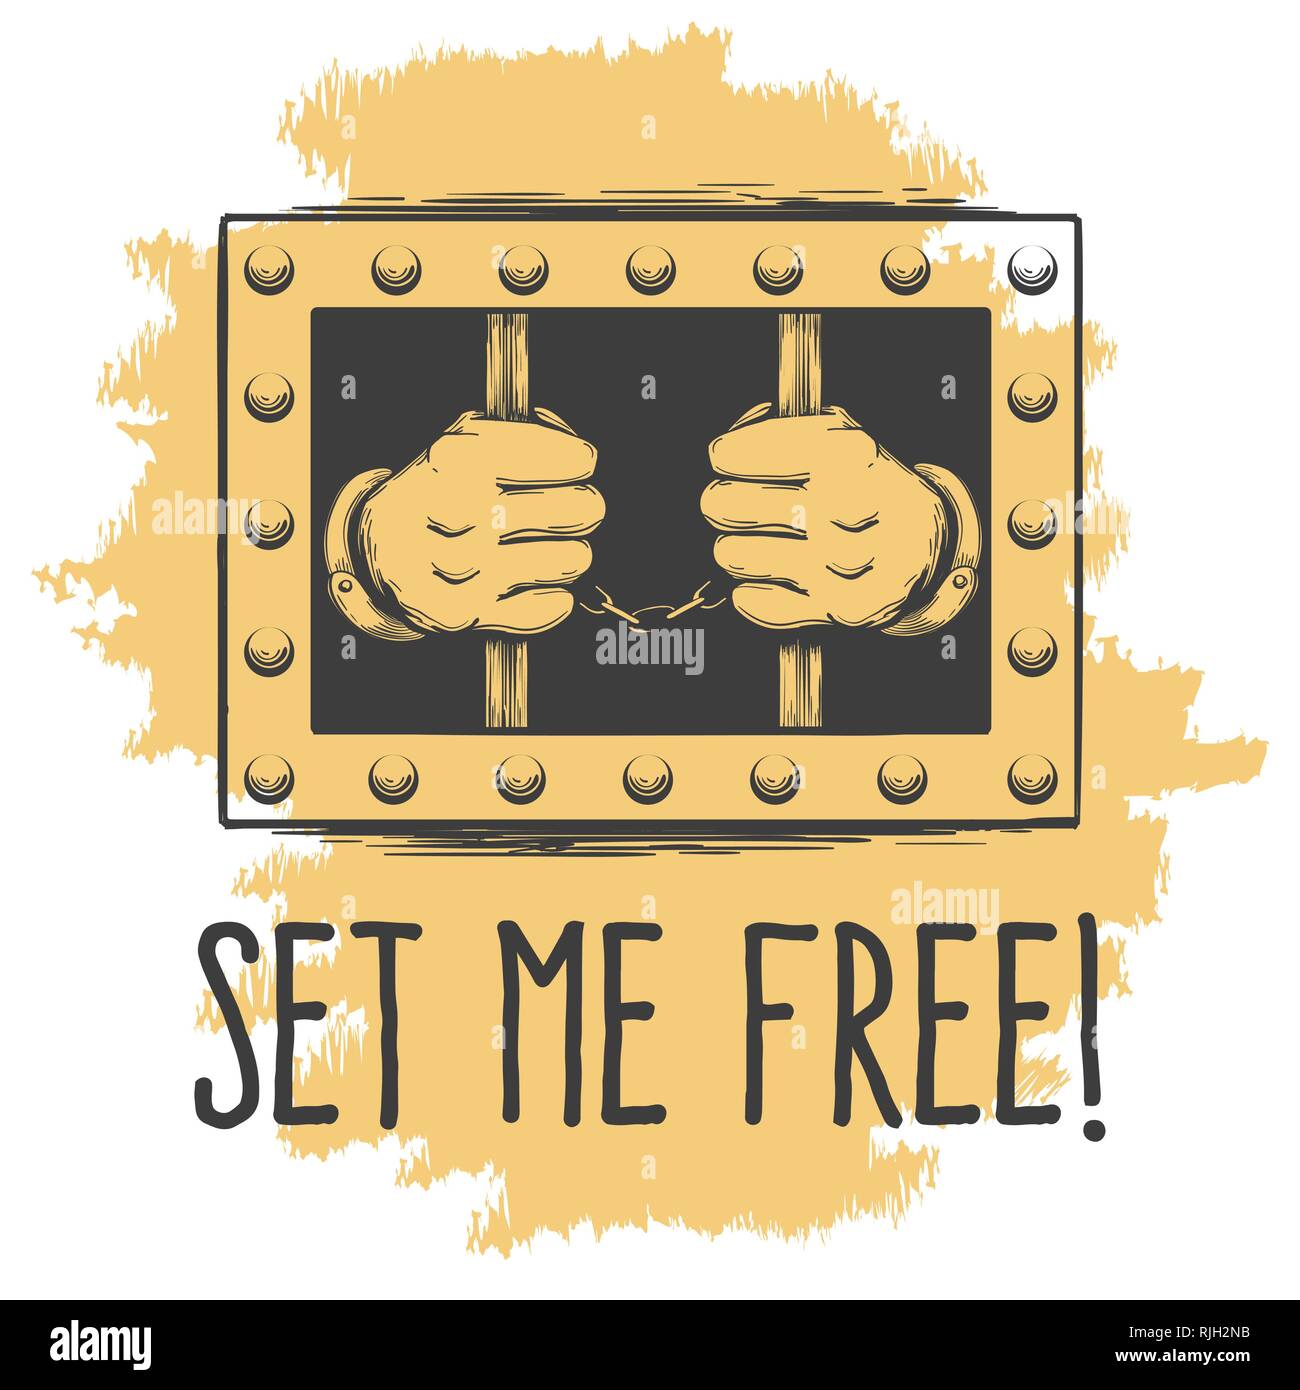 Prisoner Hands in Cuffs Holds Bars and wording Set me Free on grunge background. Vector illustration Stock Vector